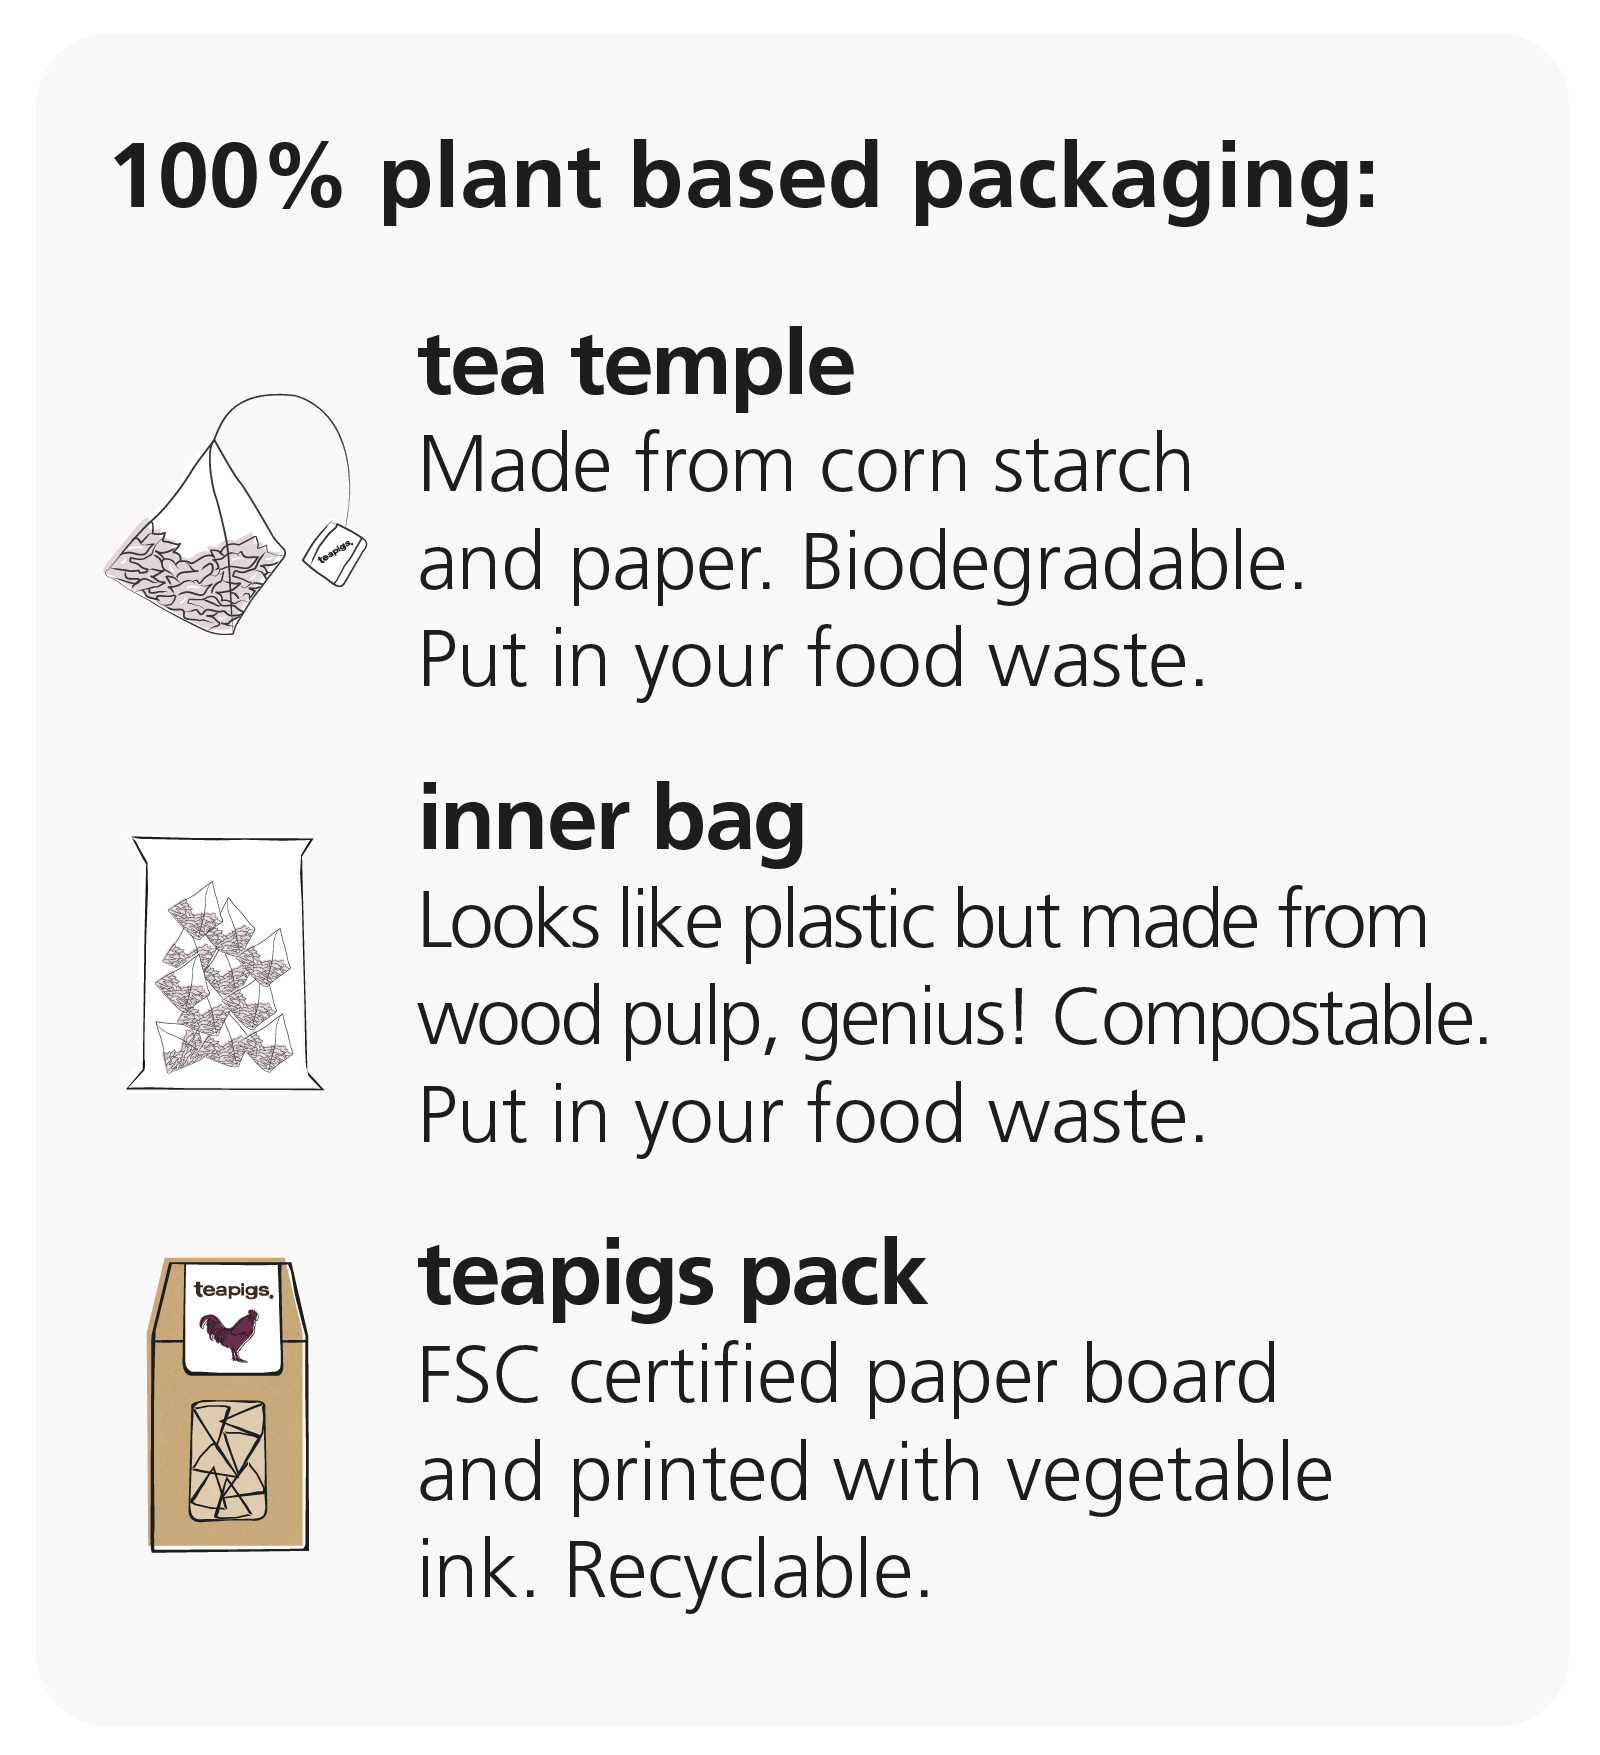 teapigs affaldssortings guide